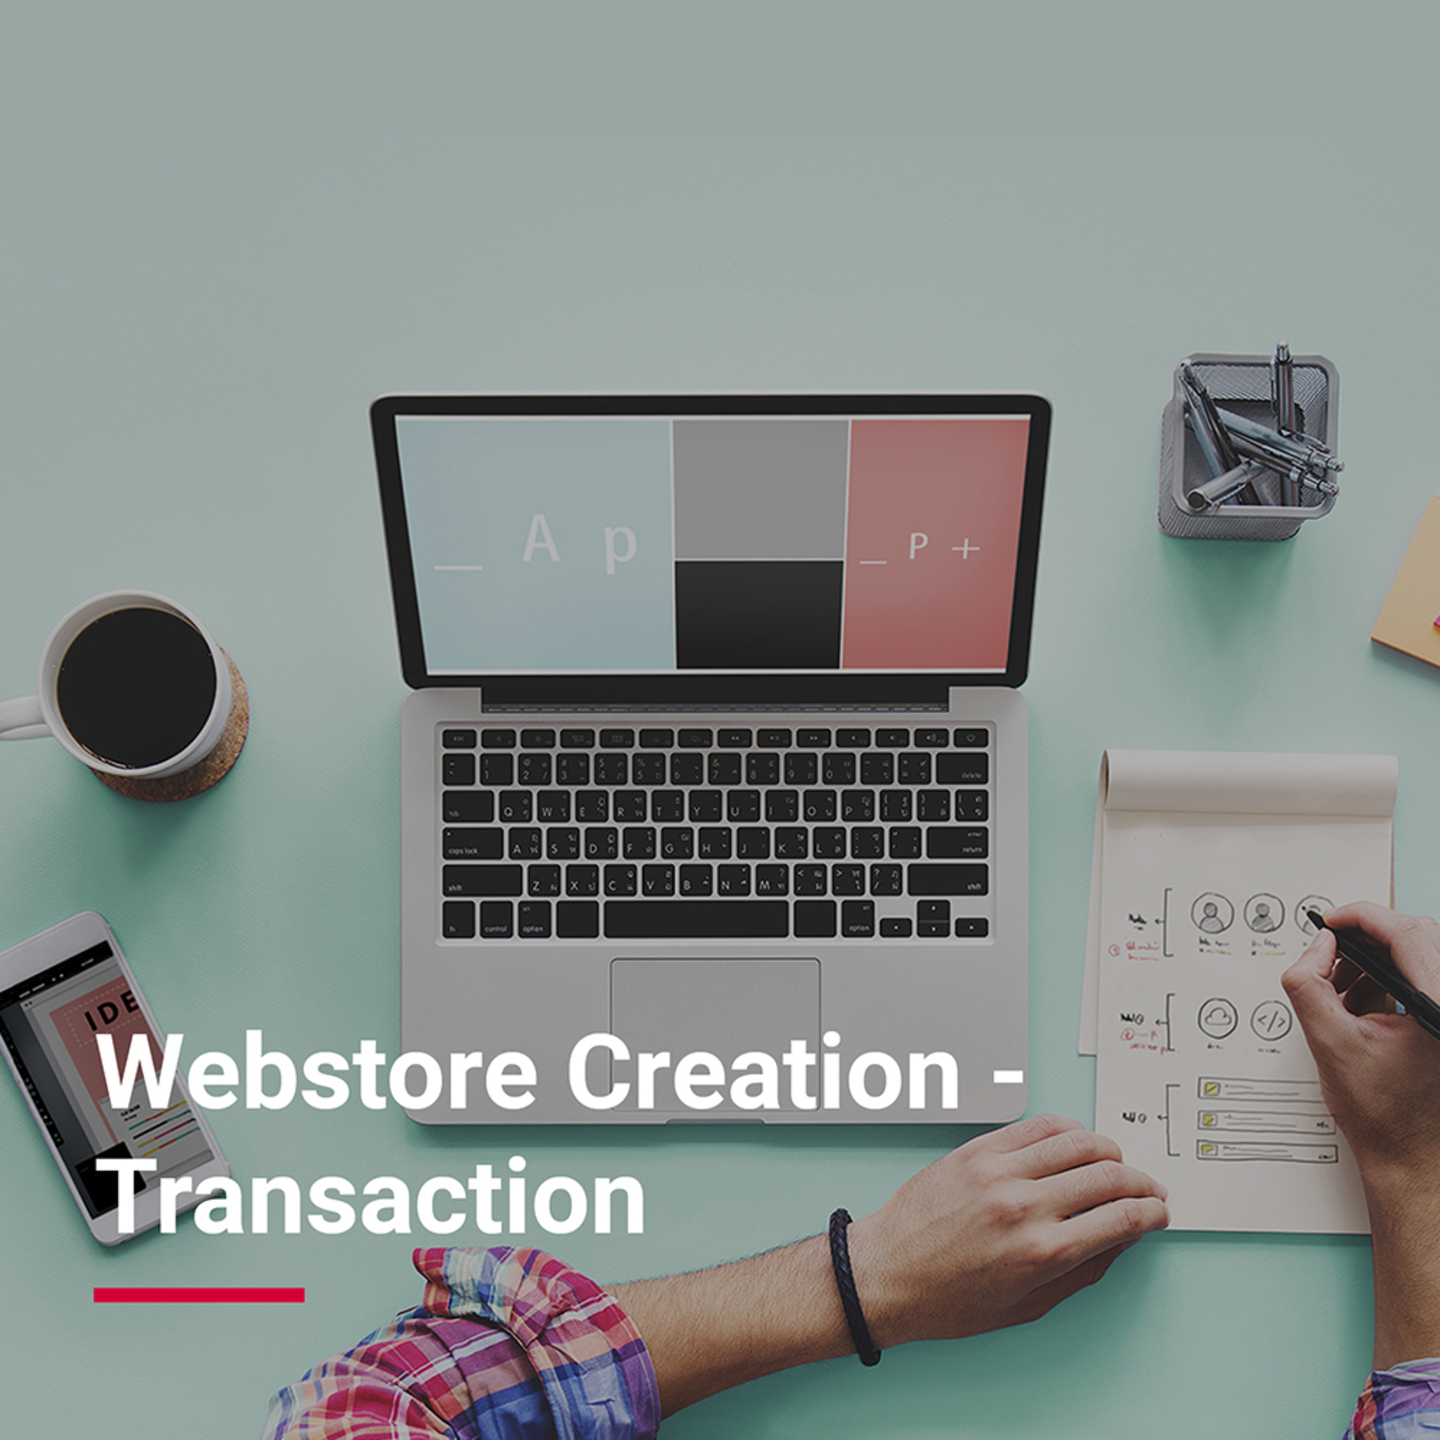 Webstore Creation - Transaction